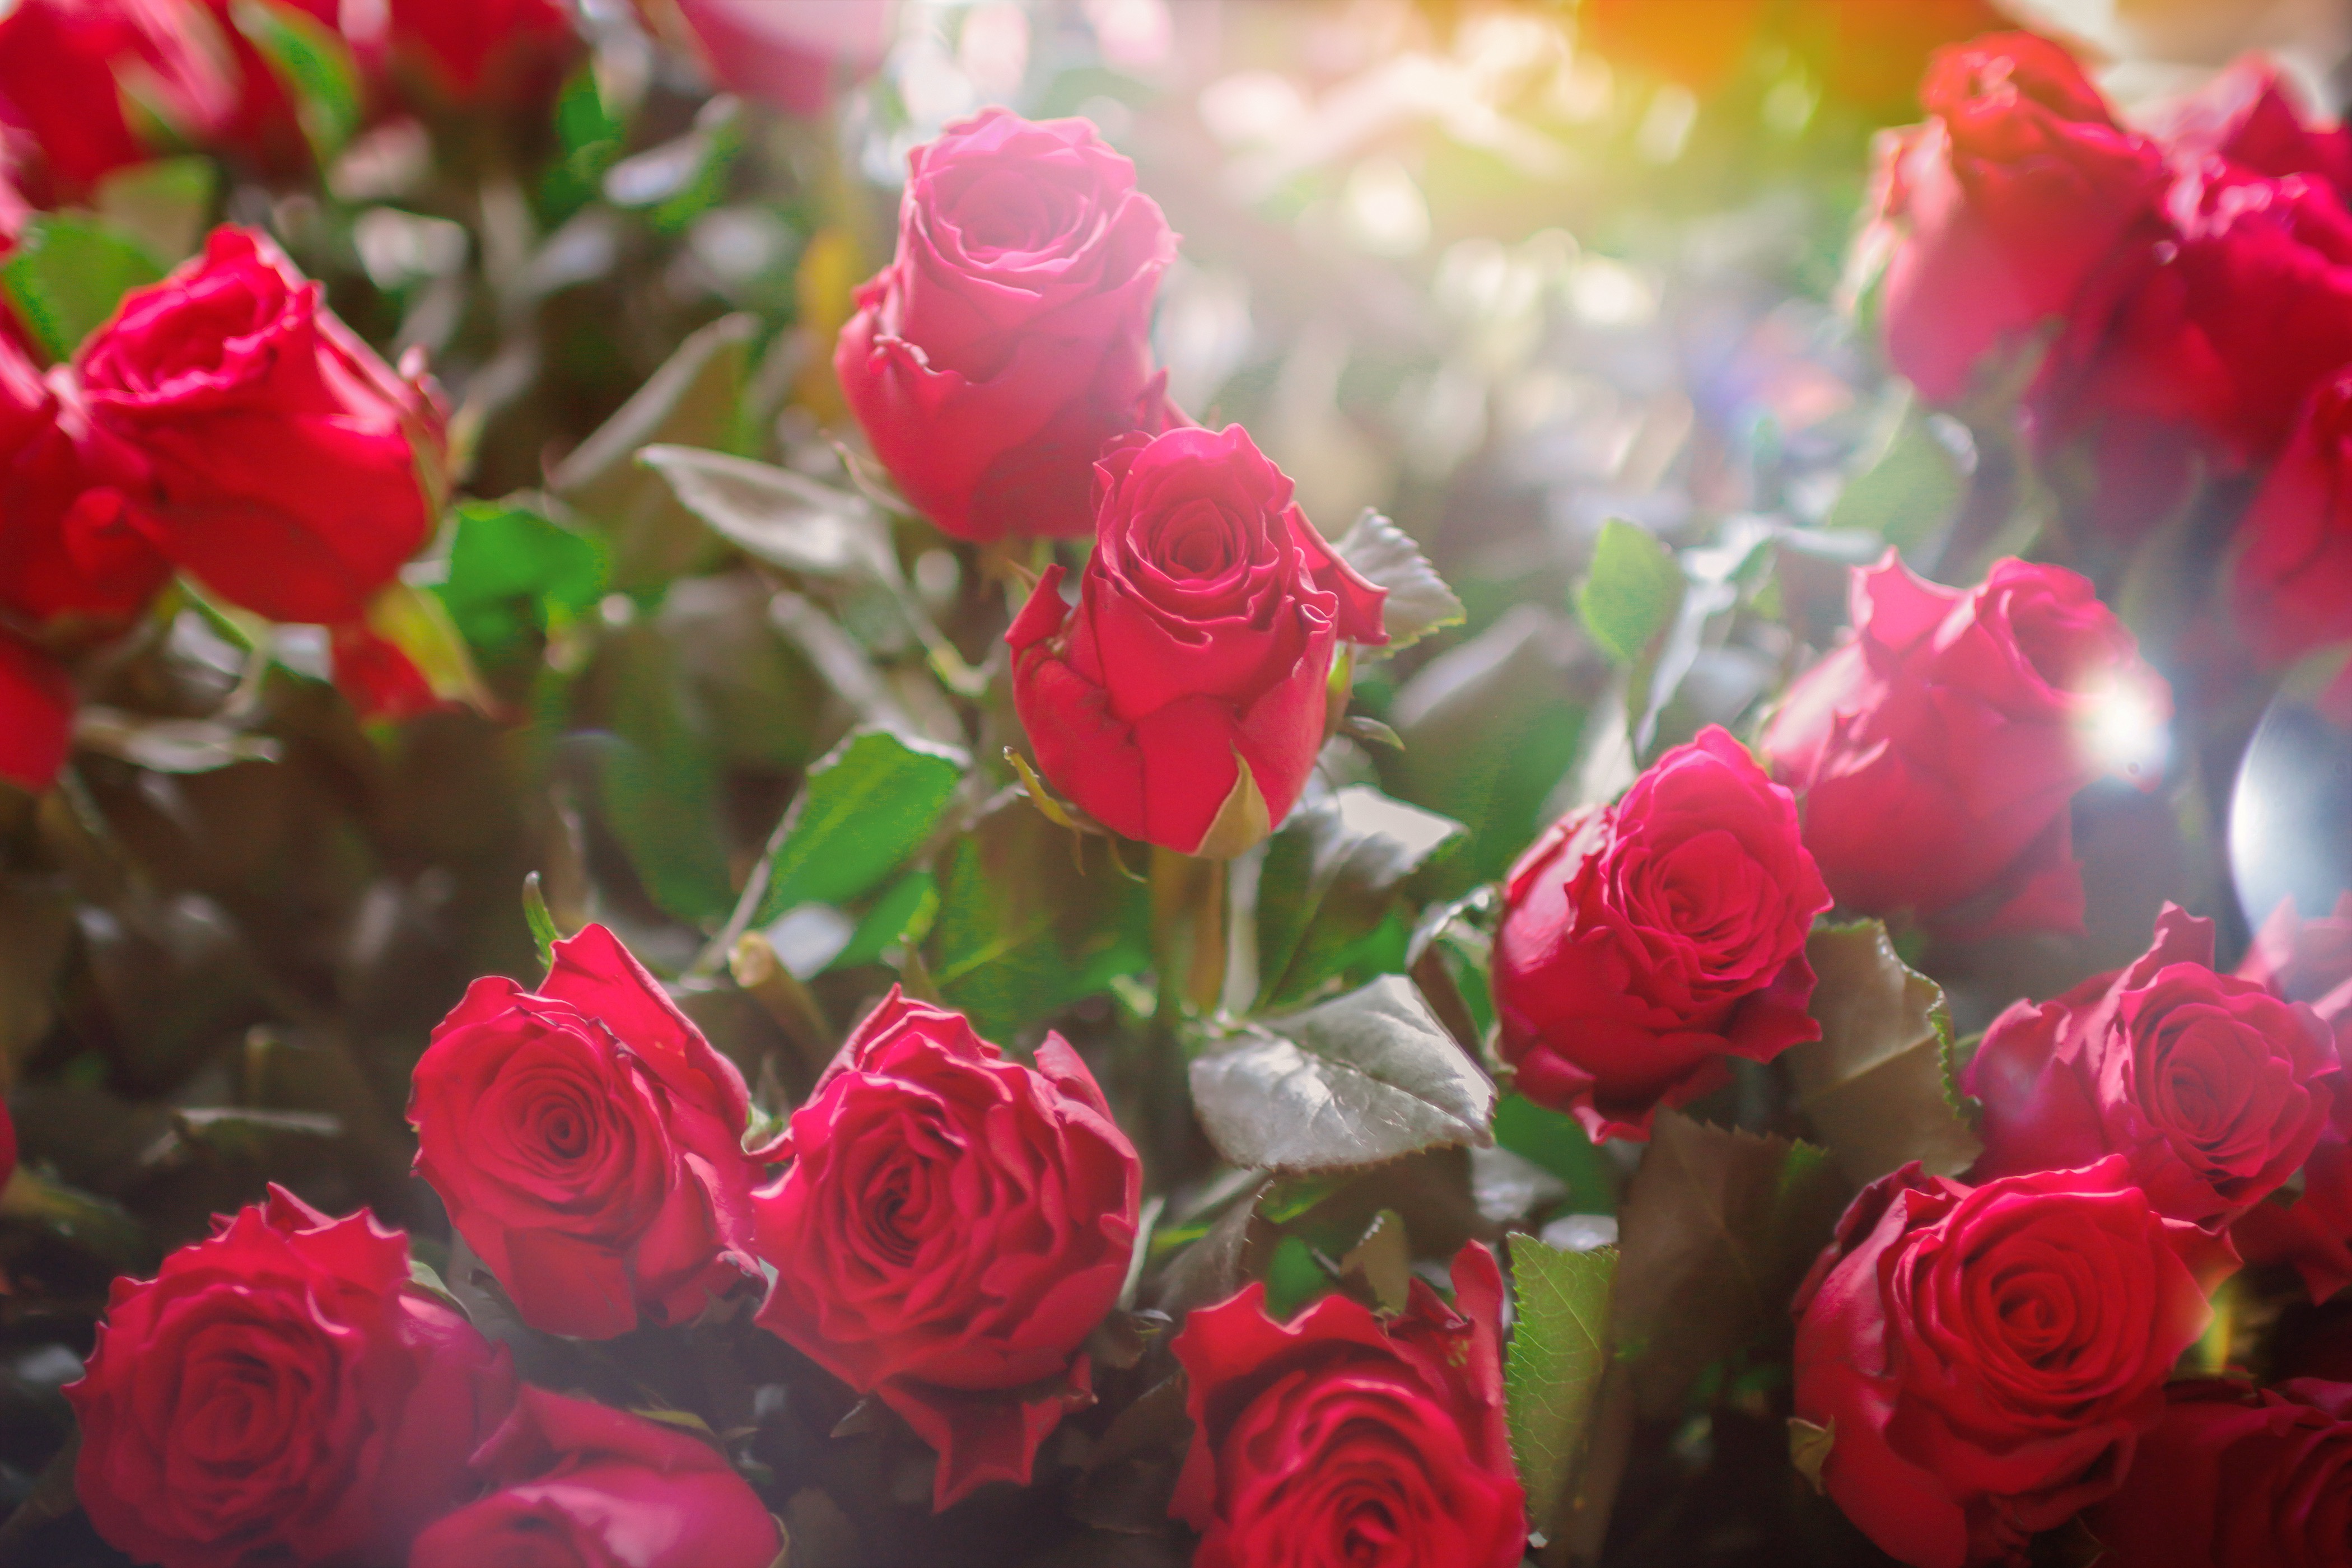 Descarga gratis la imagen Naturaleza, Flores, Rosa, Flor, Rosa Roja, Flor Roja, Tierra/naturaleza en el escritorio de tu PC